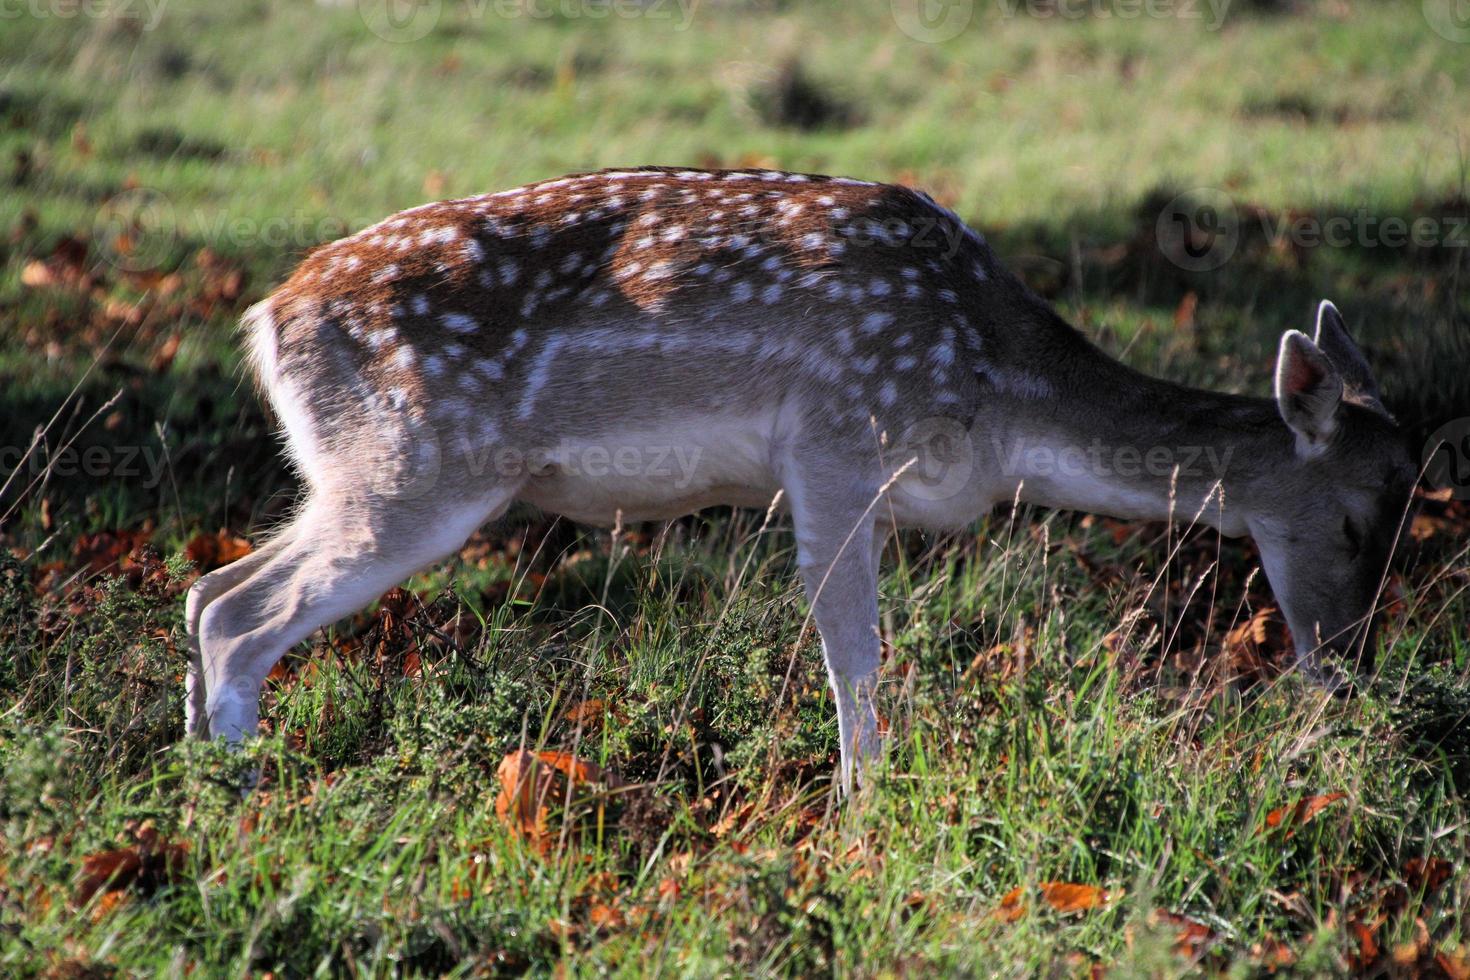 A view of a Fallow Deer photo